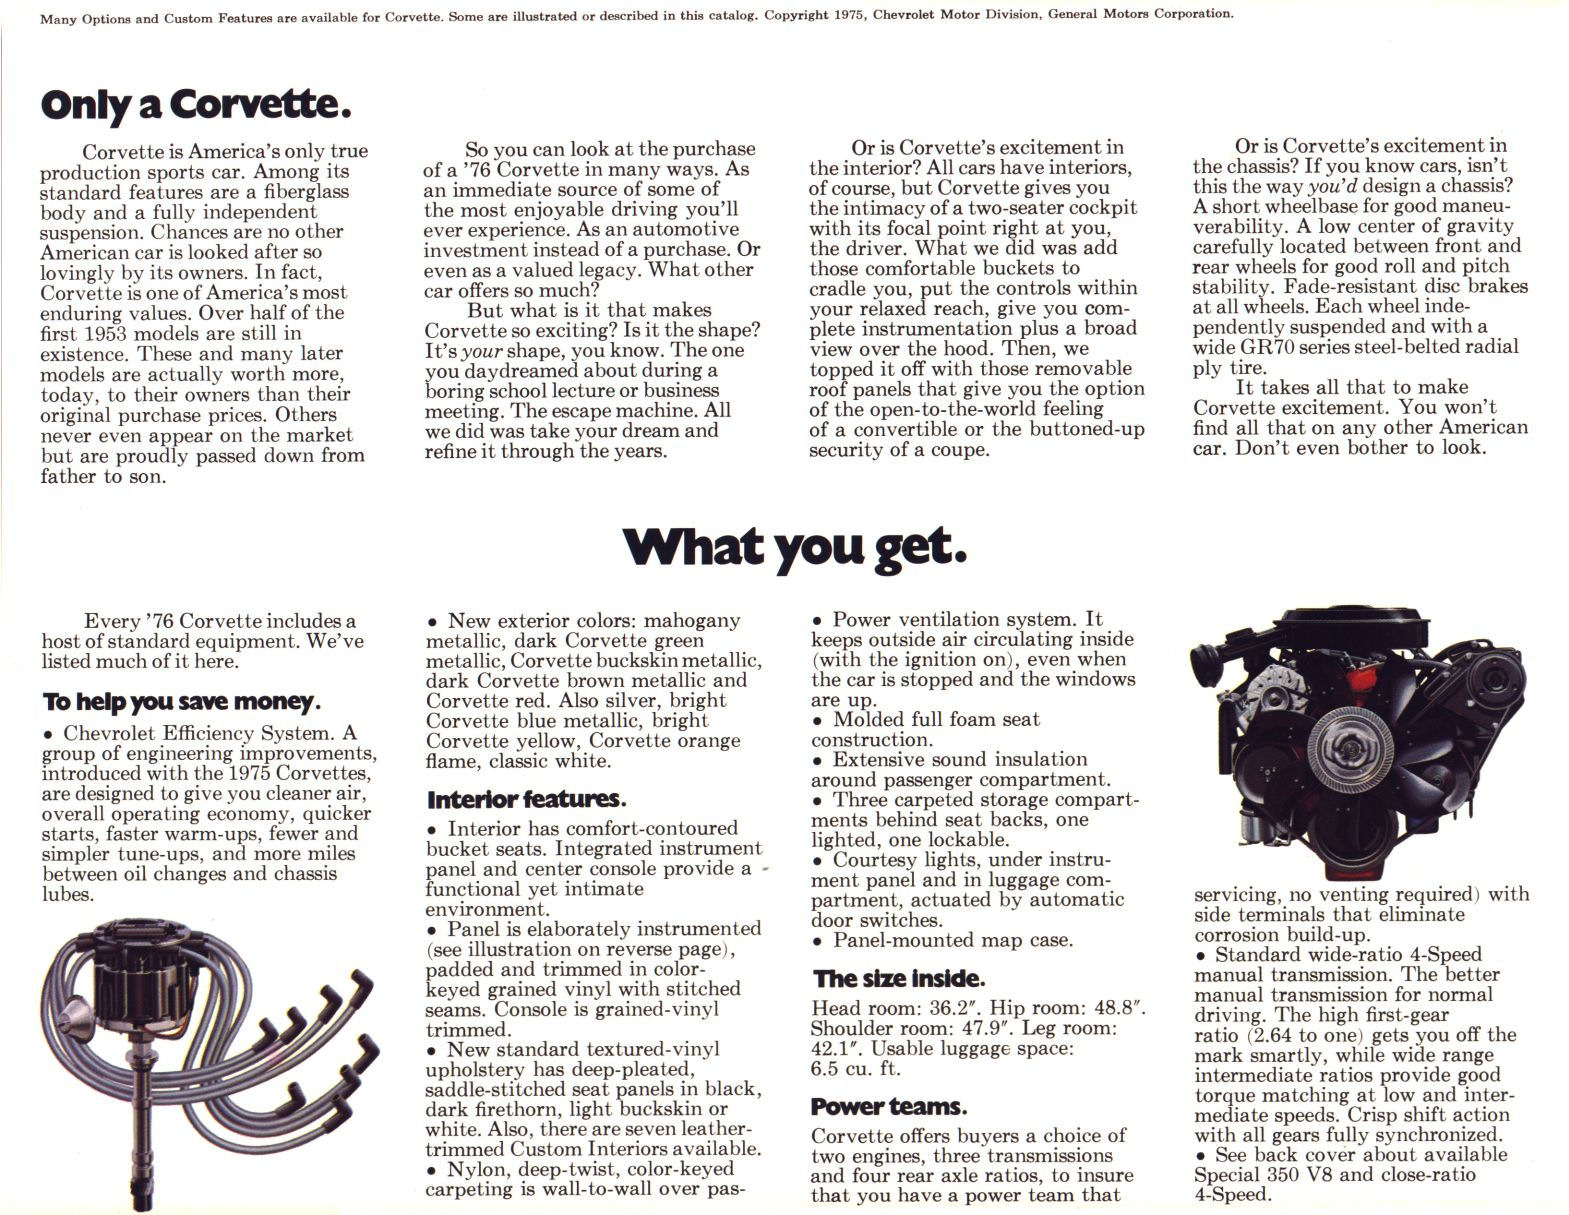 1976 Corvette Brochure Page 3